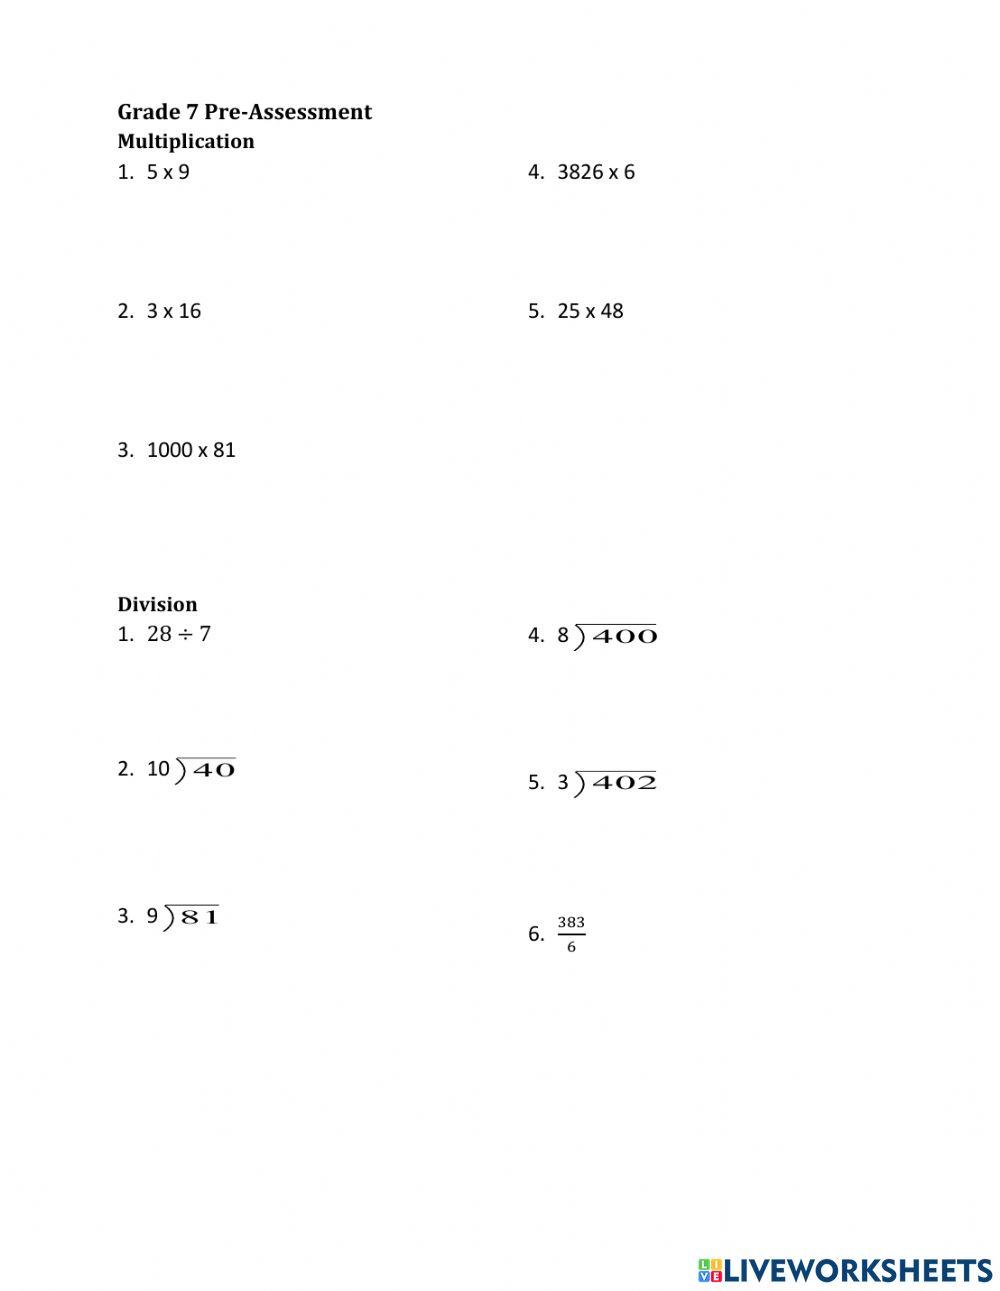 Grade 7 math Diagnostic Test - 2